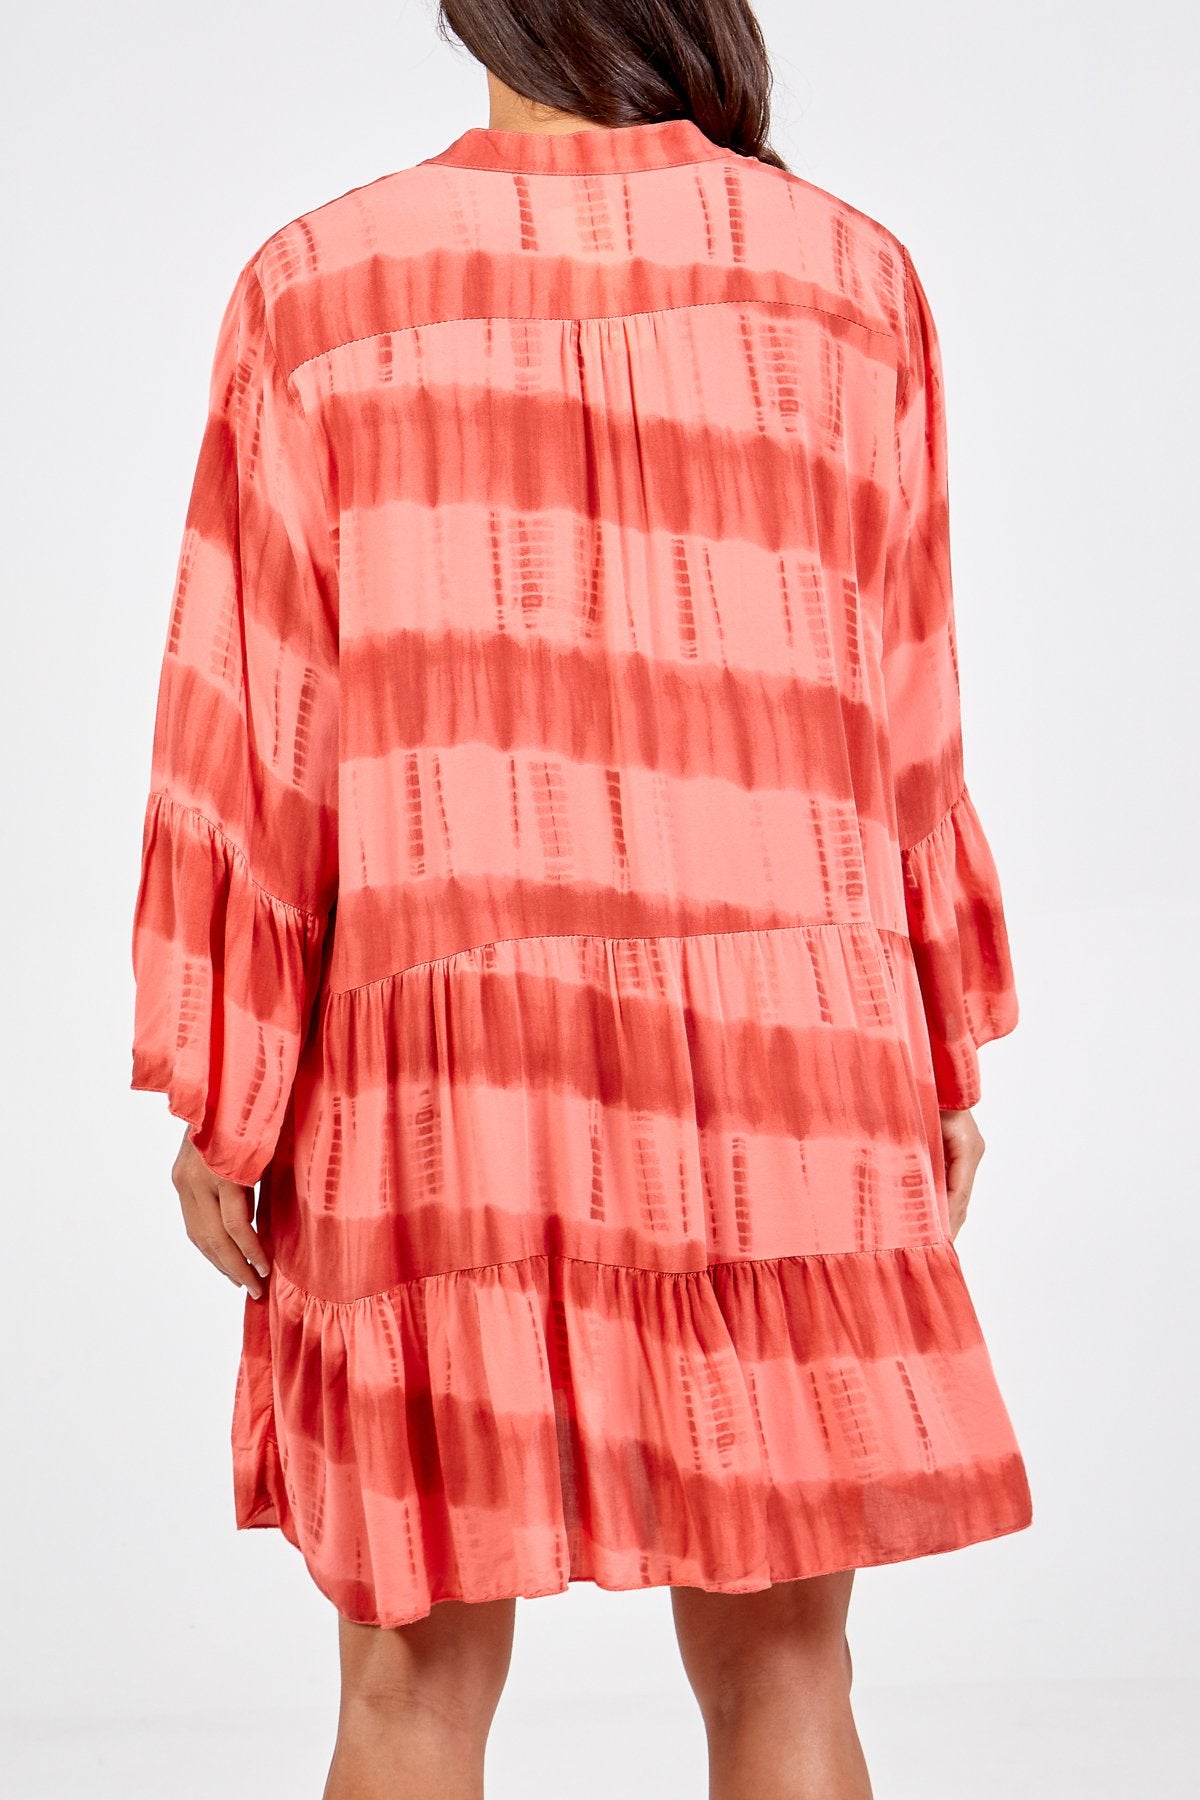 Pauseology comfortable clothing women menopause stylish cool tie dye smock dress dresses italian made